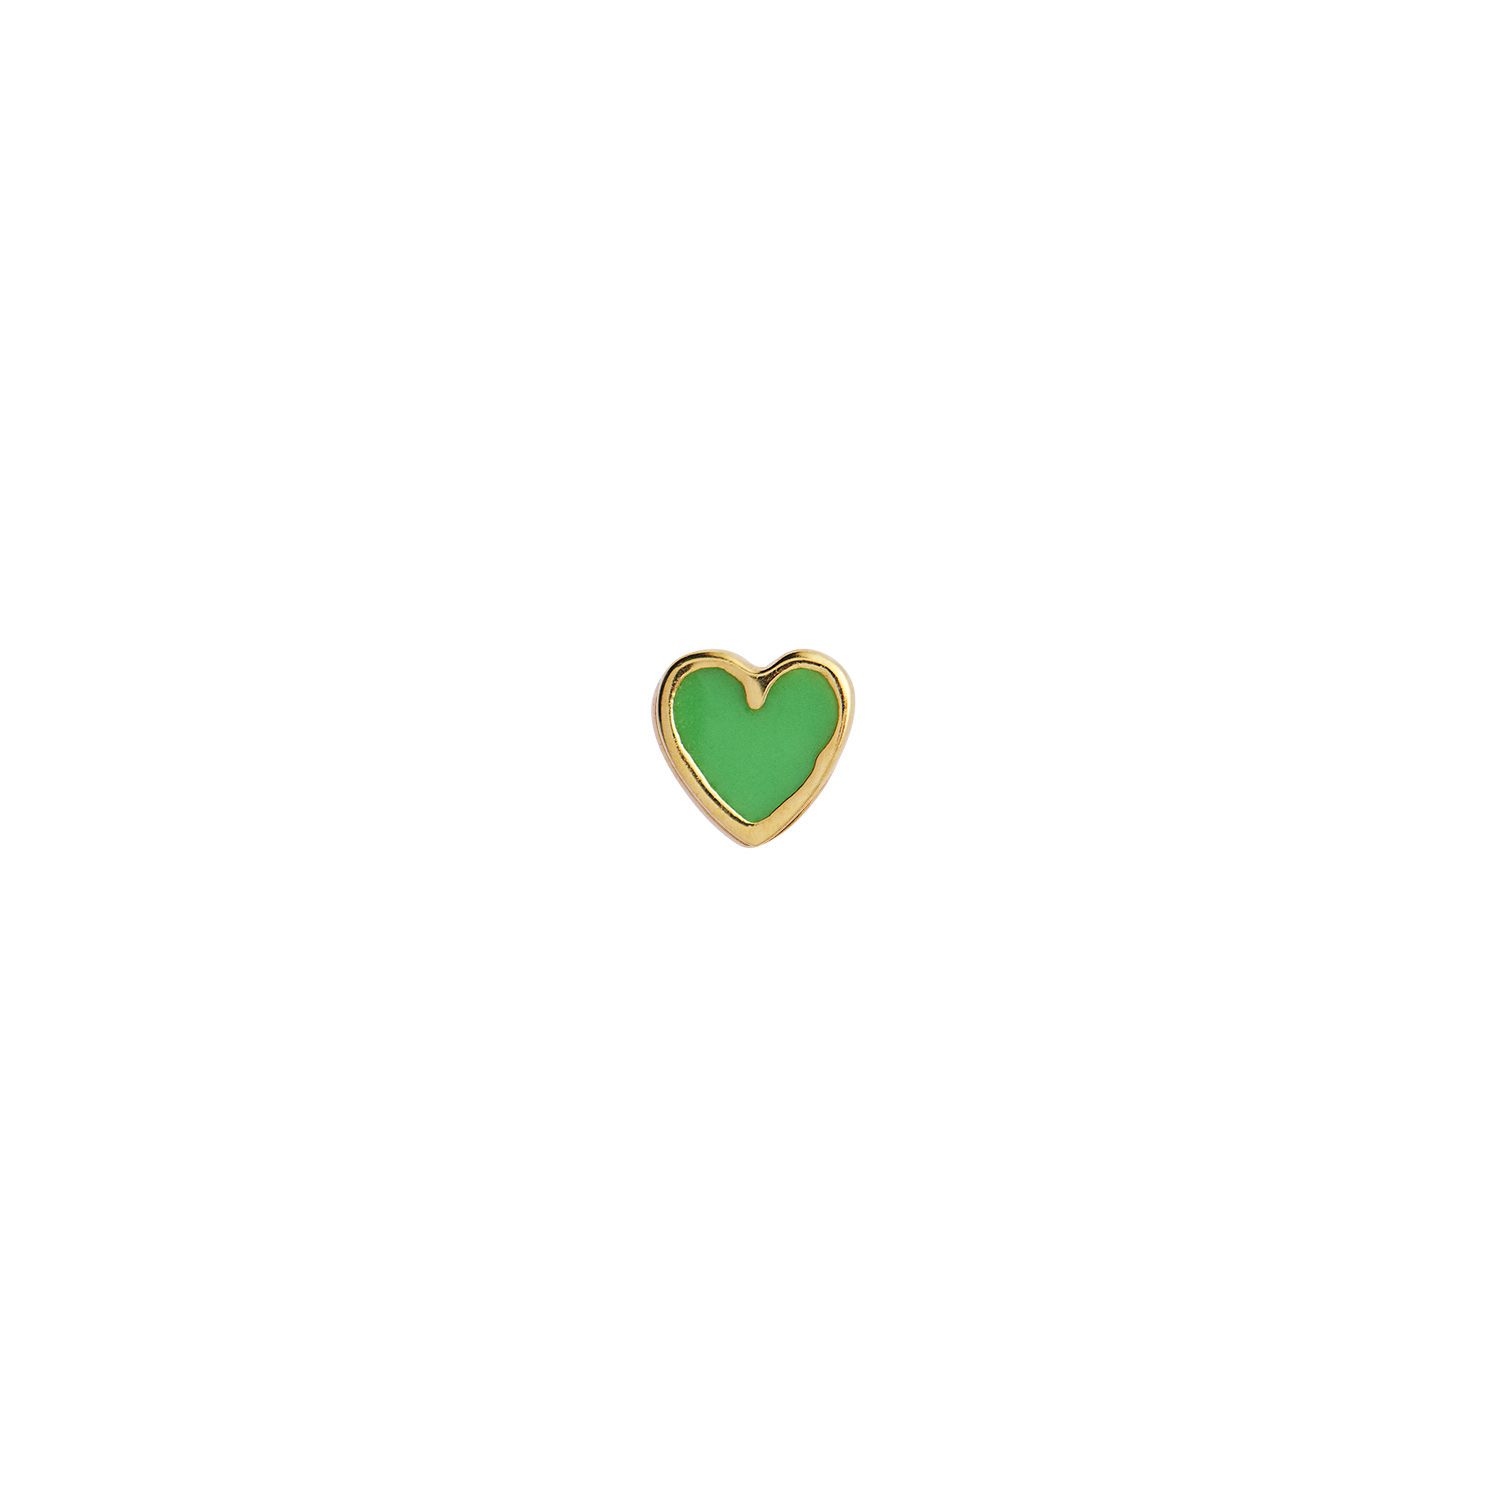 Stine A Petit Love heart - 1181-02-Grass - Stine A